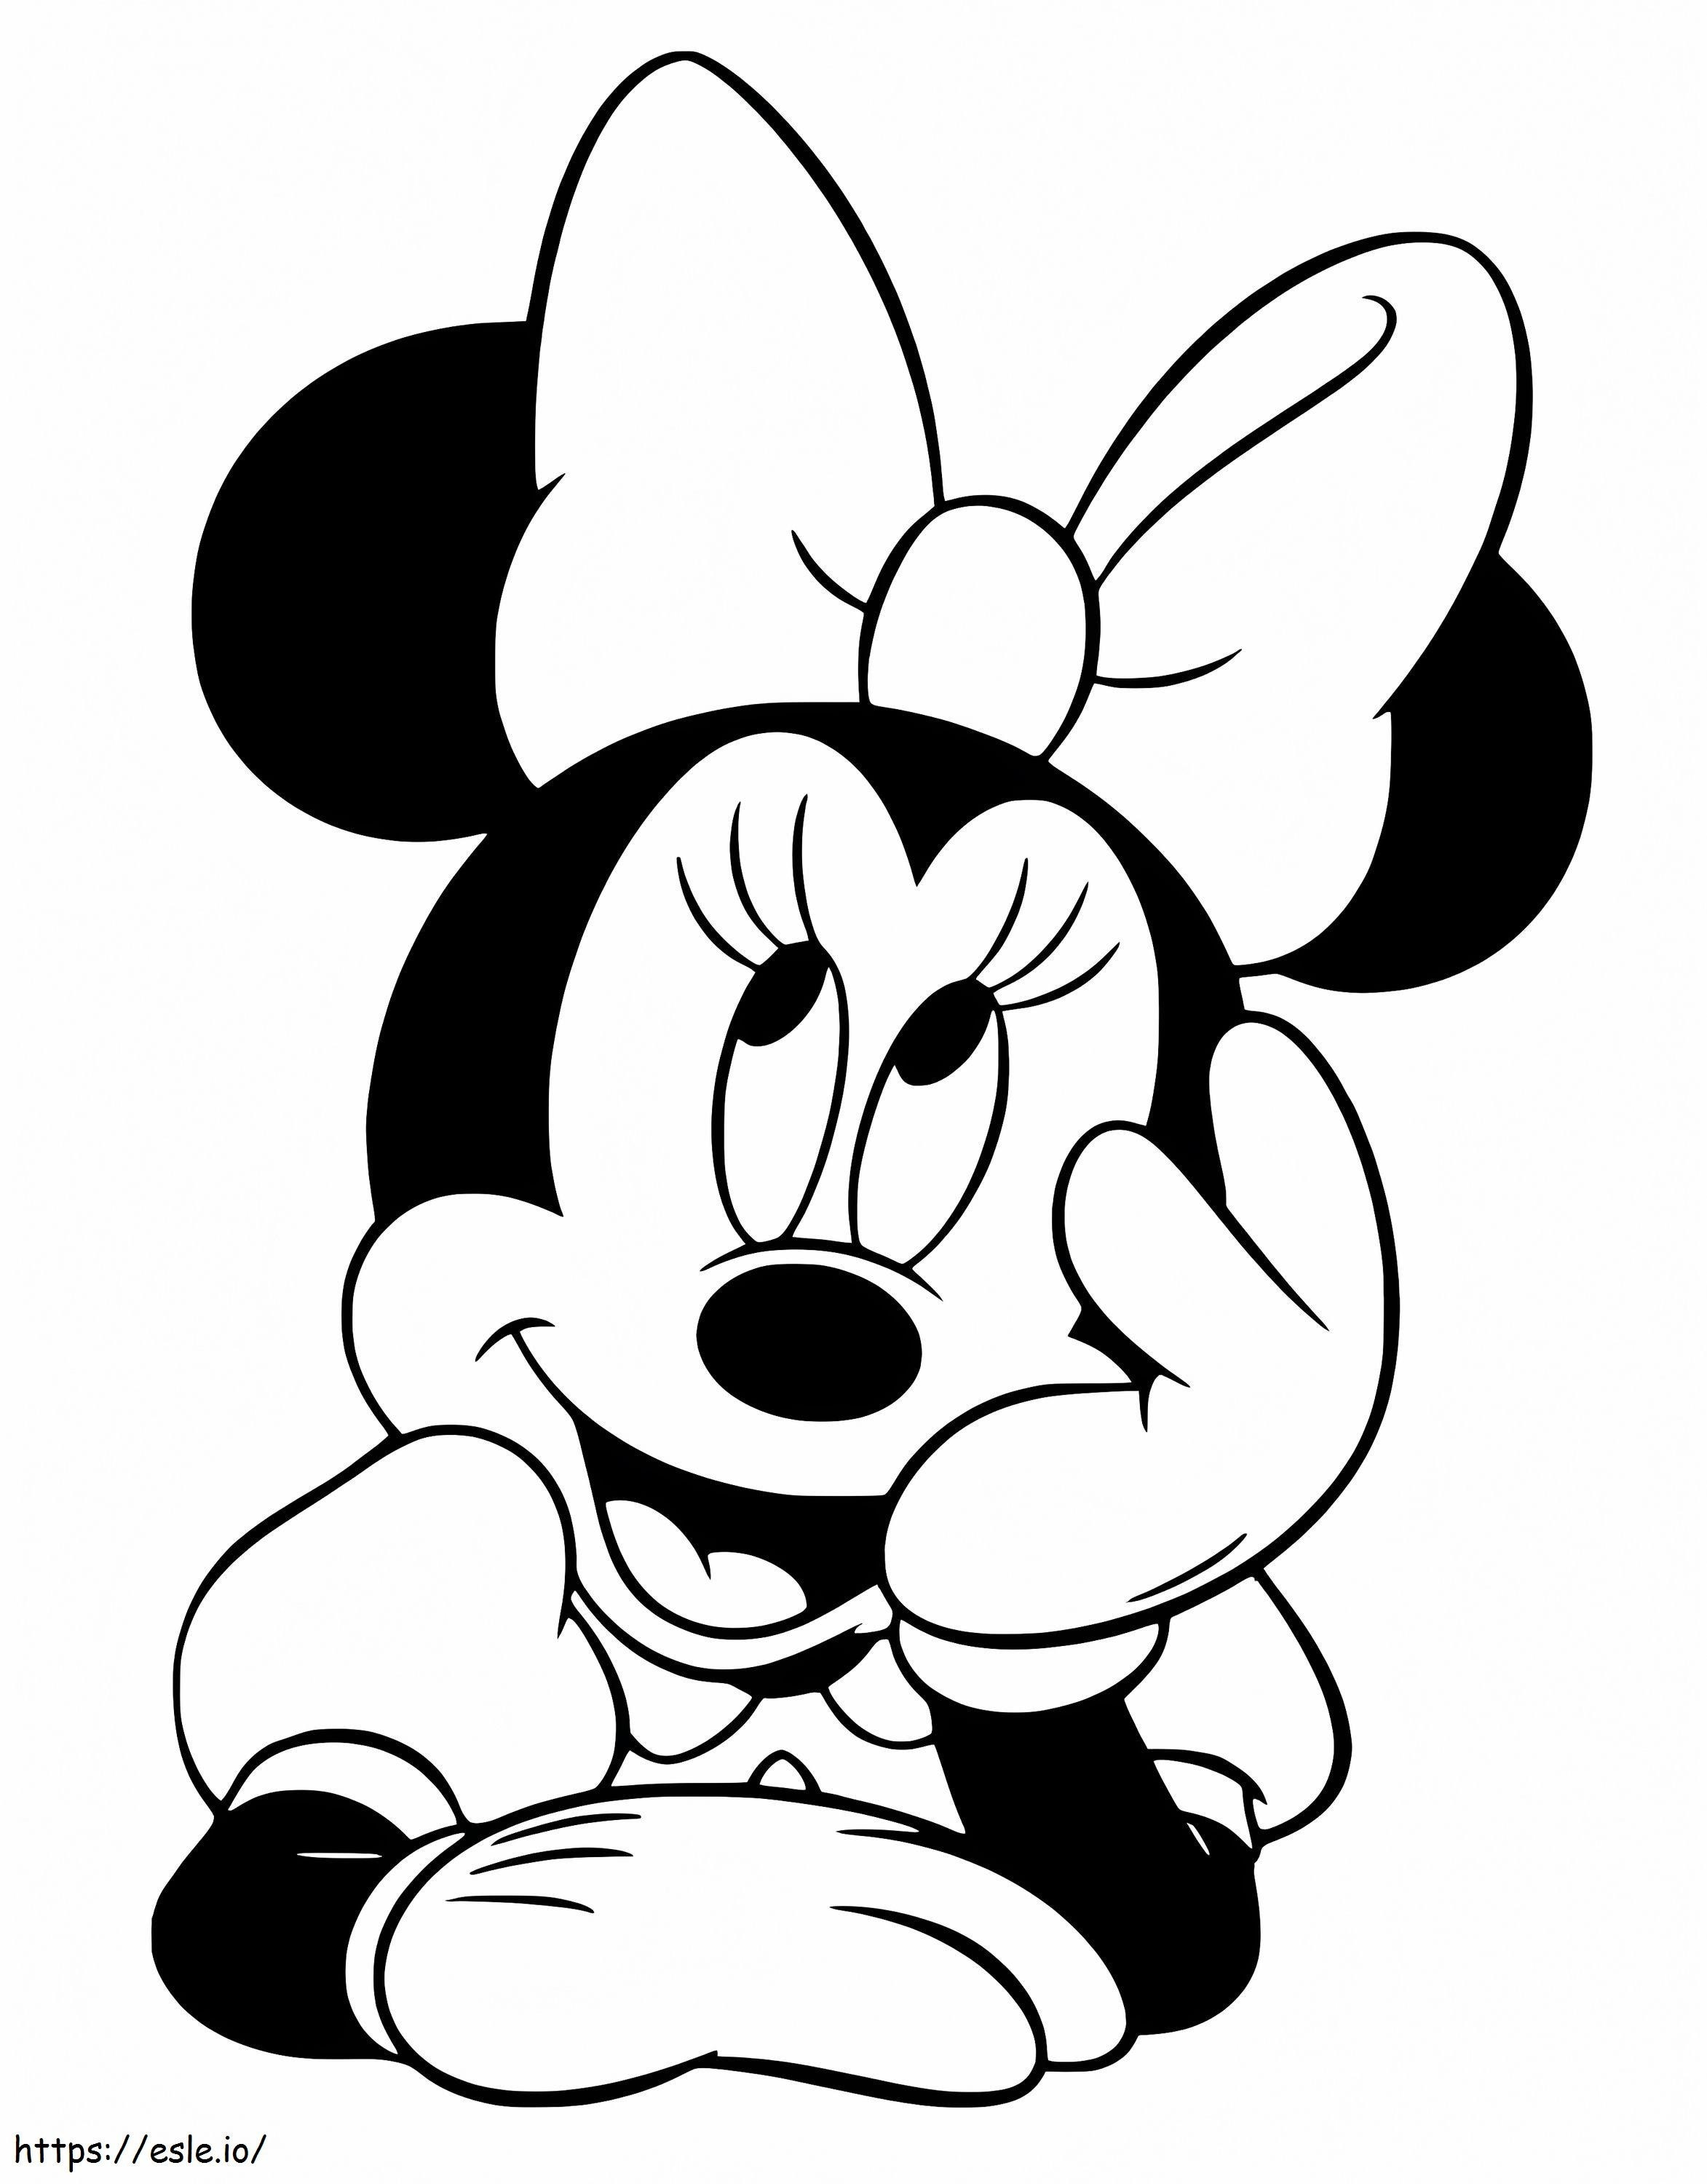 Minnie Mouse sonríe para colorear